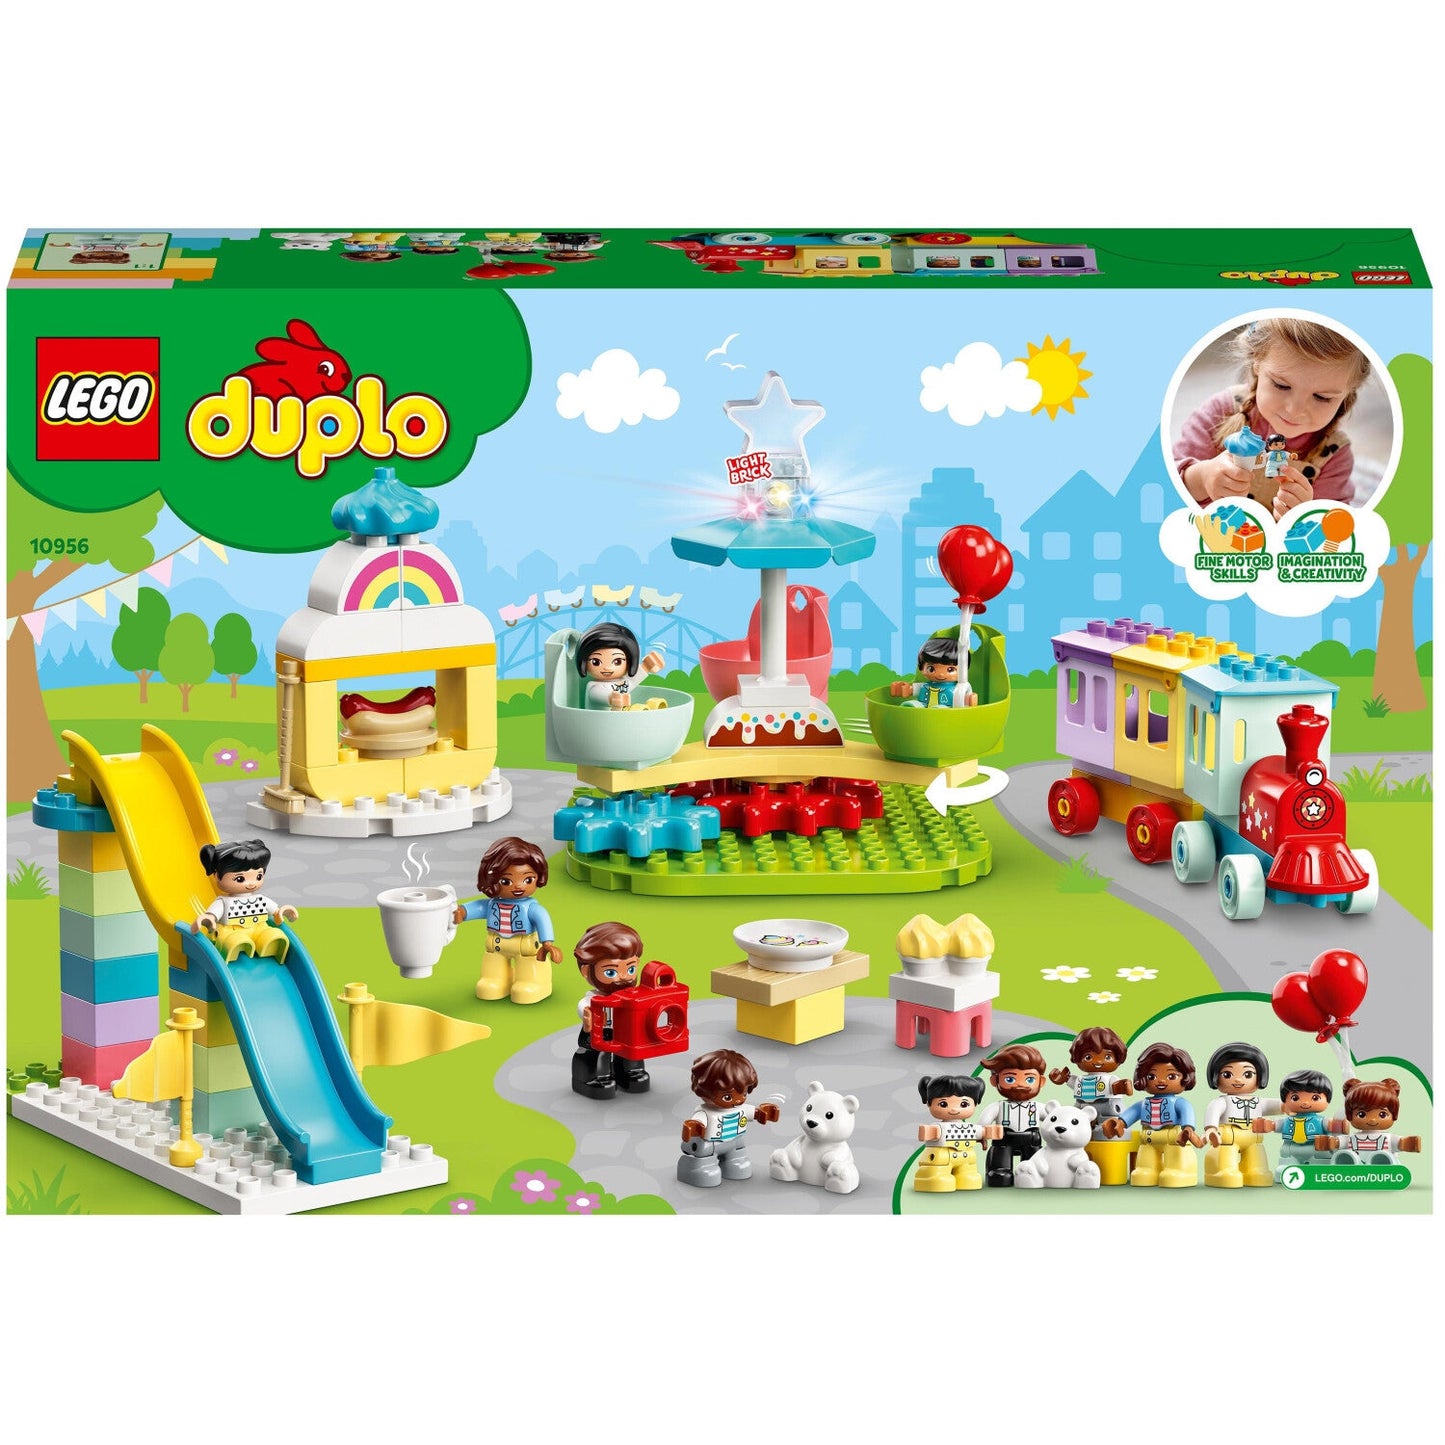 LEGO 10956 Duplo Erlebnispark